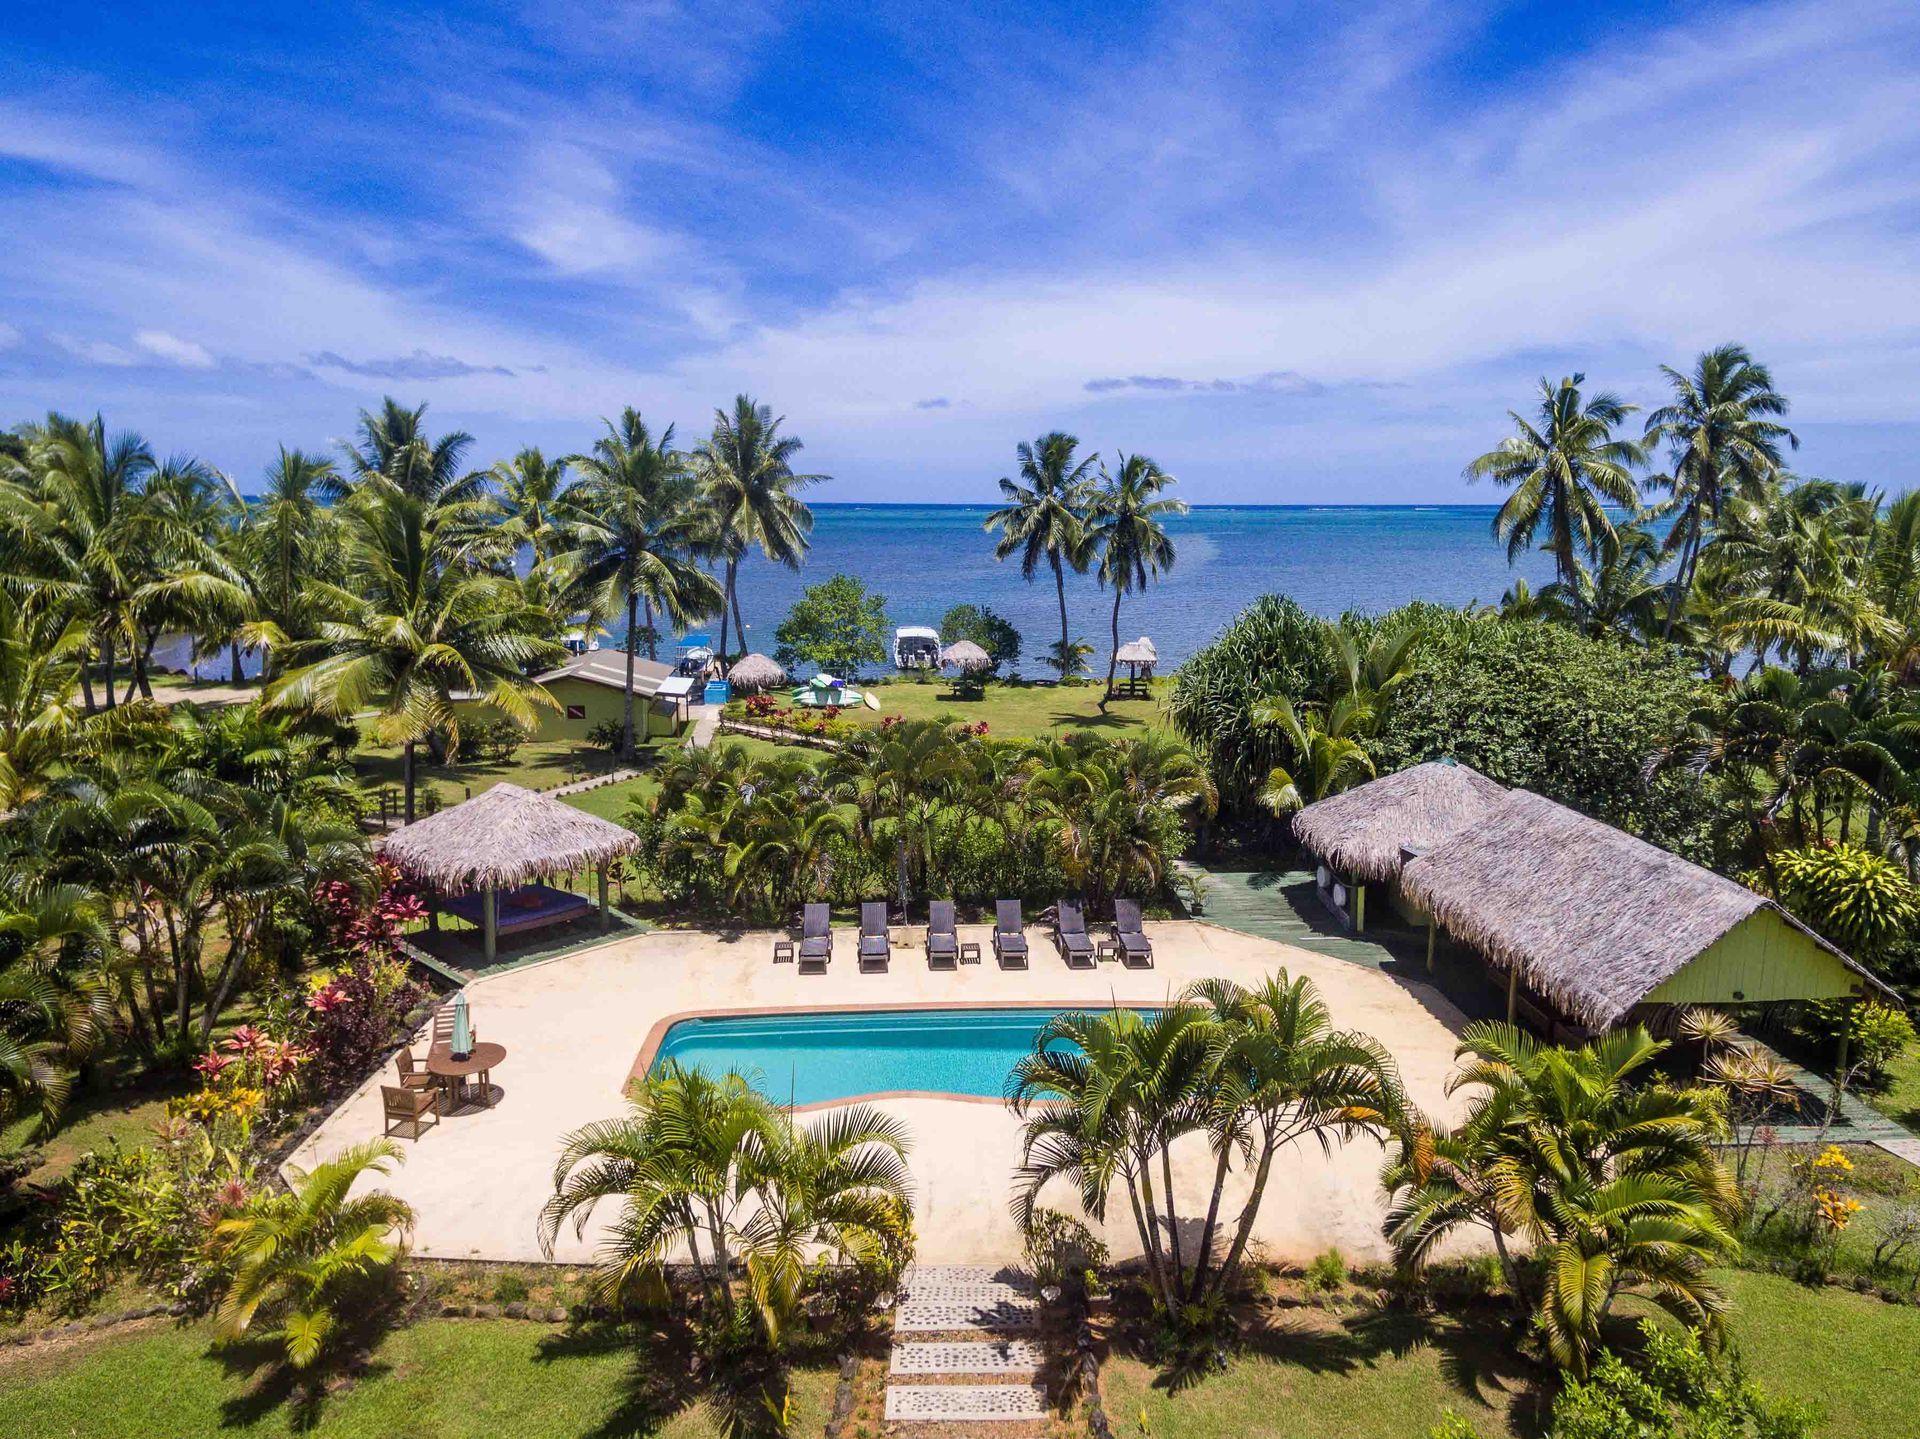 The pool area by drone at Waidroka Bay resort in Fiji 